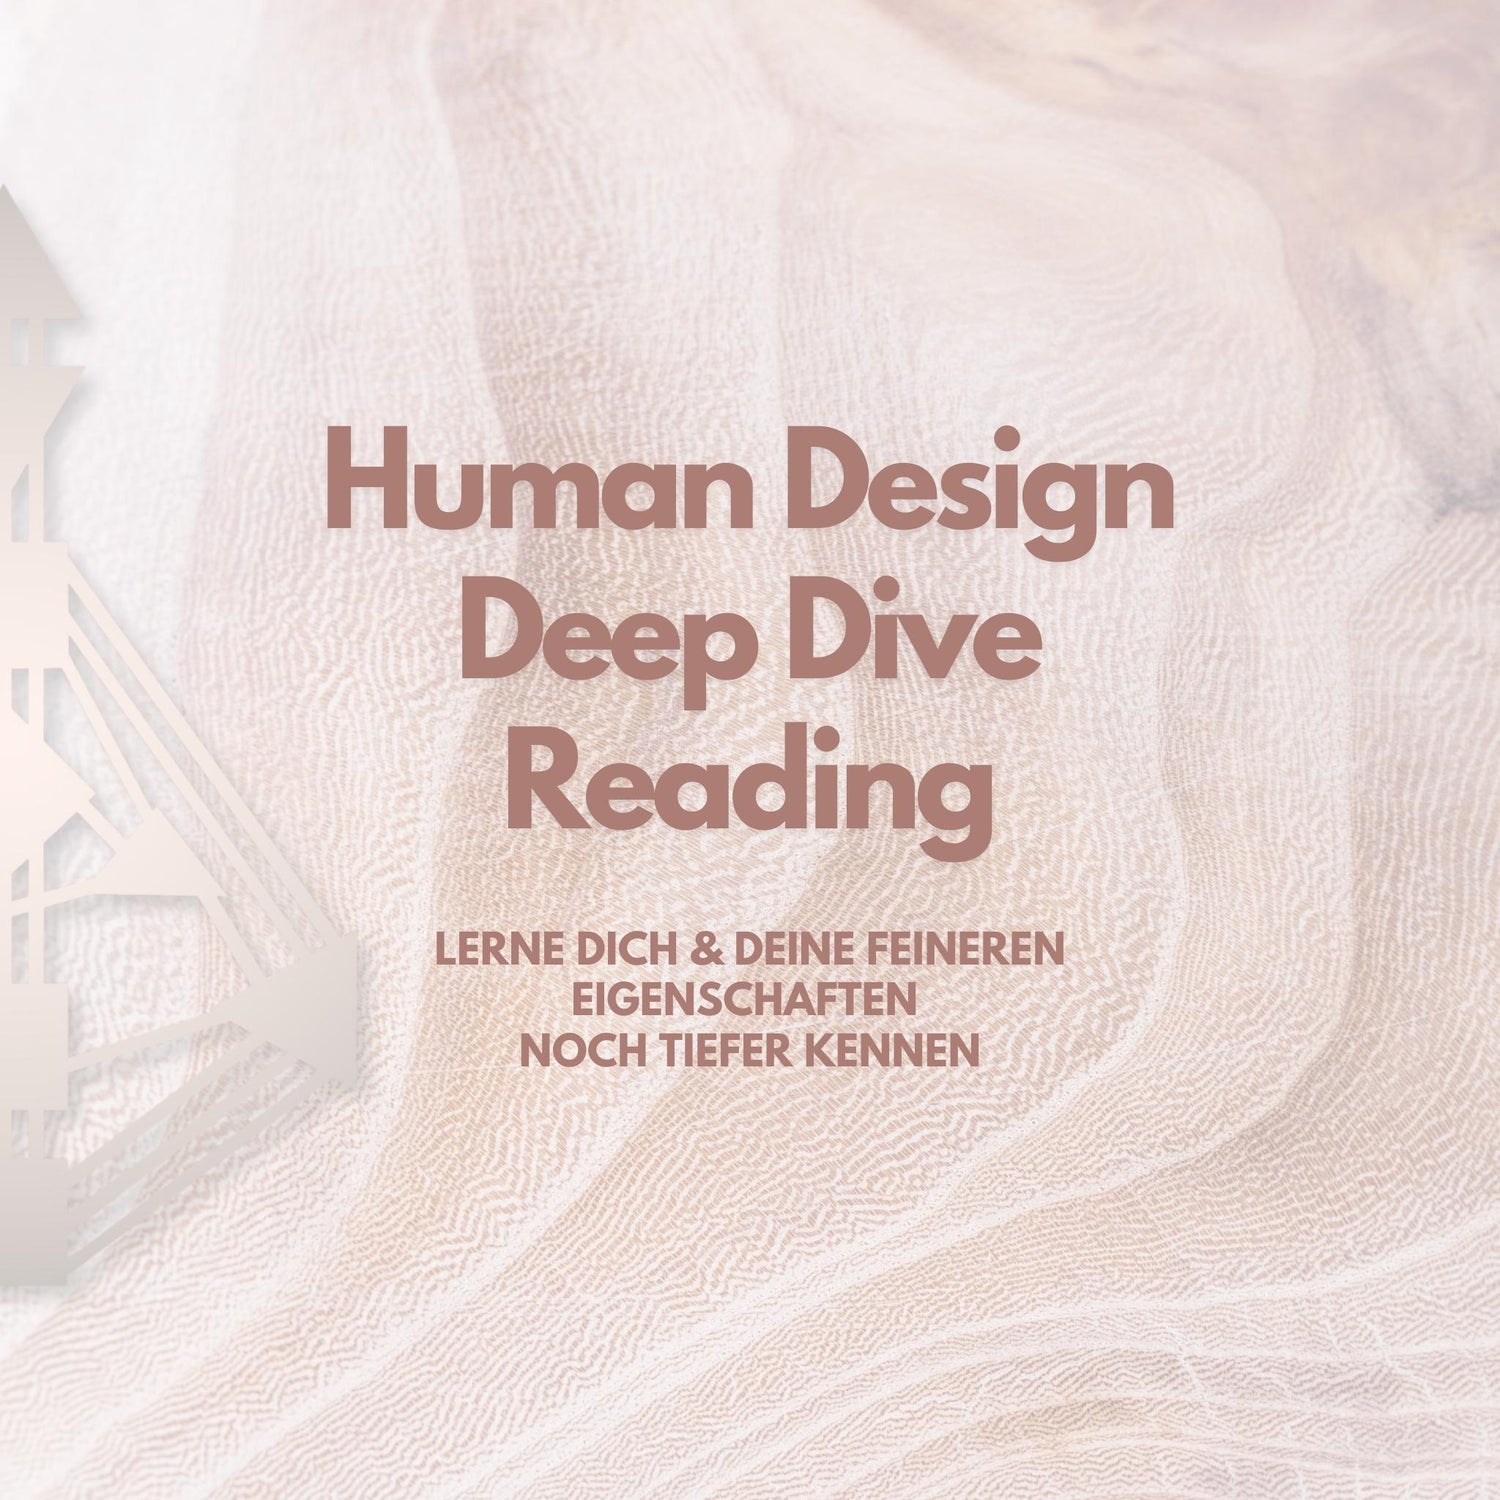 Human Design Deep Dive Reading in Human Design Shop kaufen